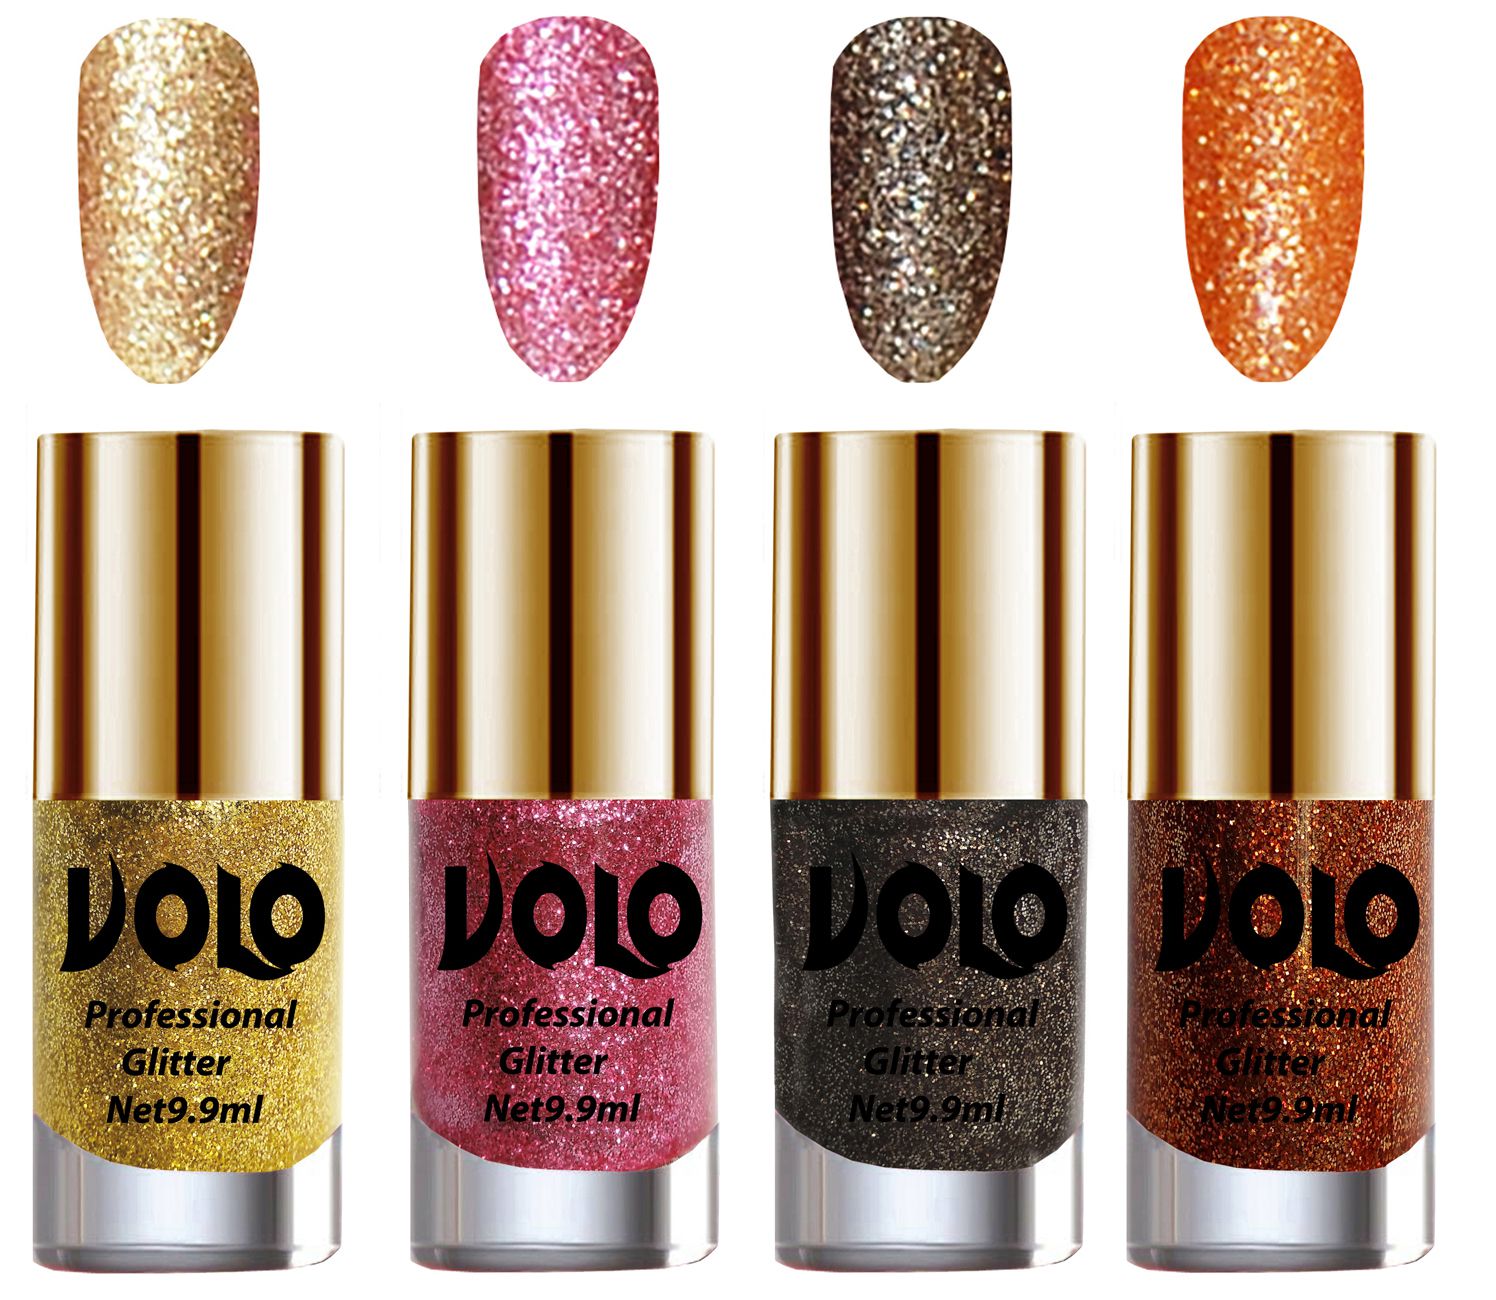     			VOLO Professionally Used Glitter Shine Nail Polish Gold,Pink,Grey Orange Pack of 4 39 mL